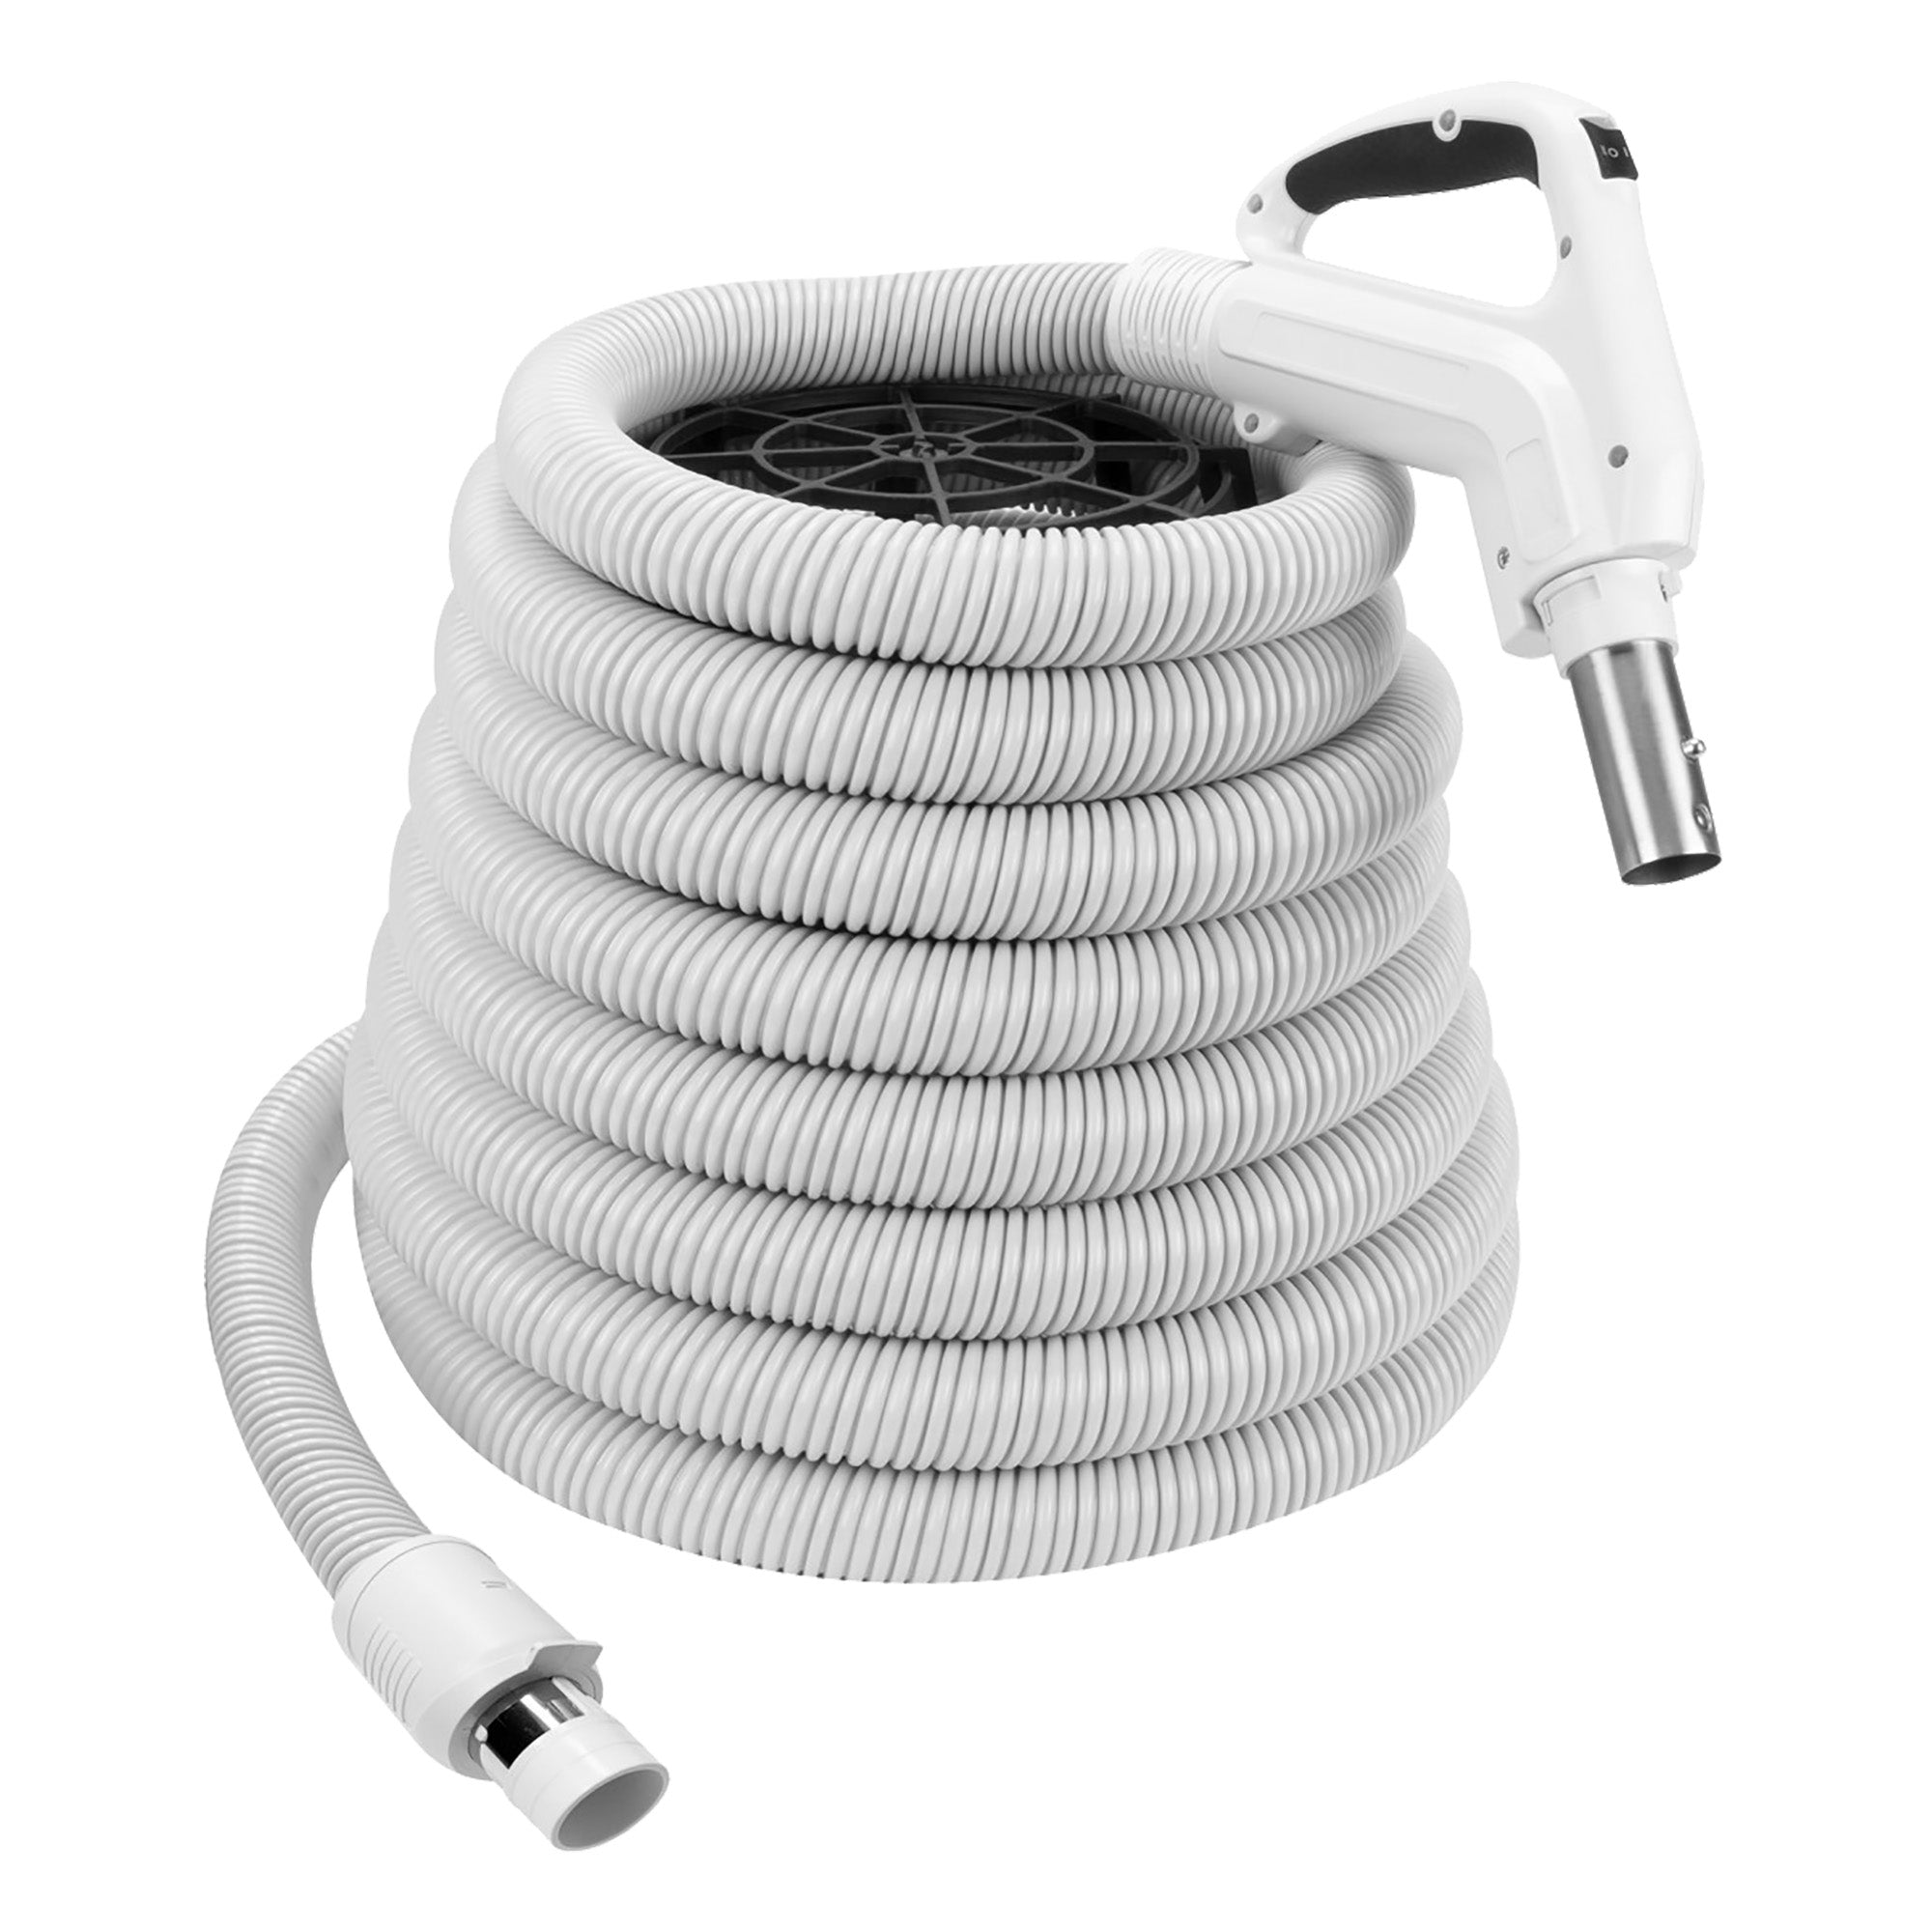 Central Vacuum Cleaner Air Hose - White